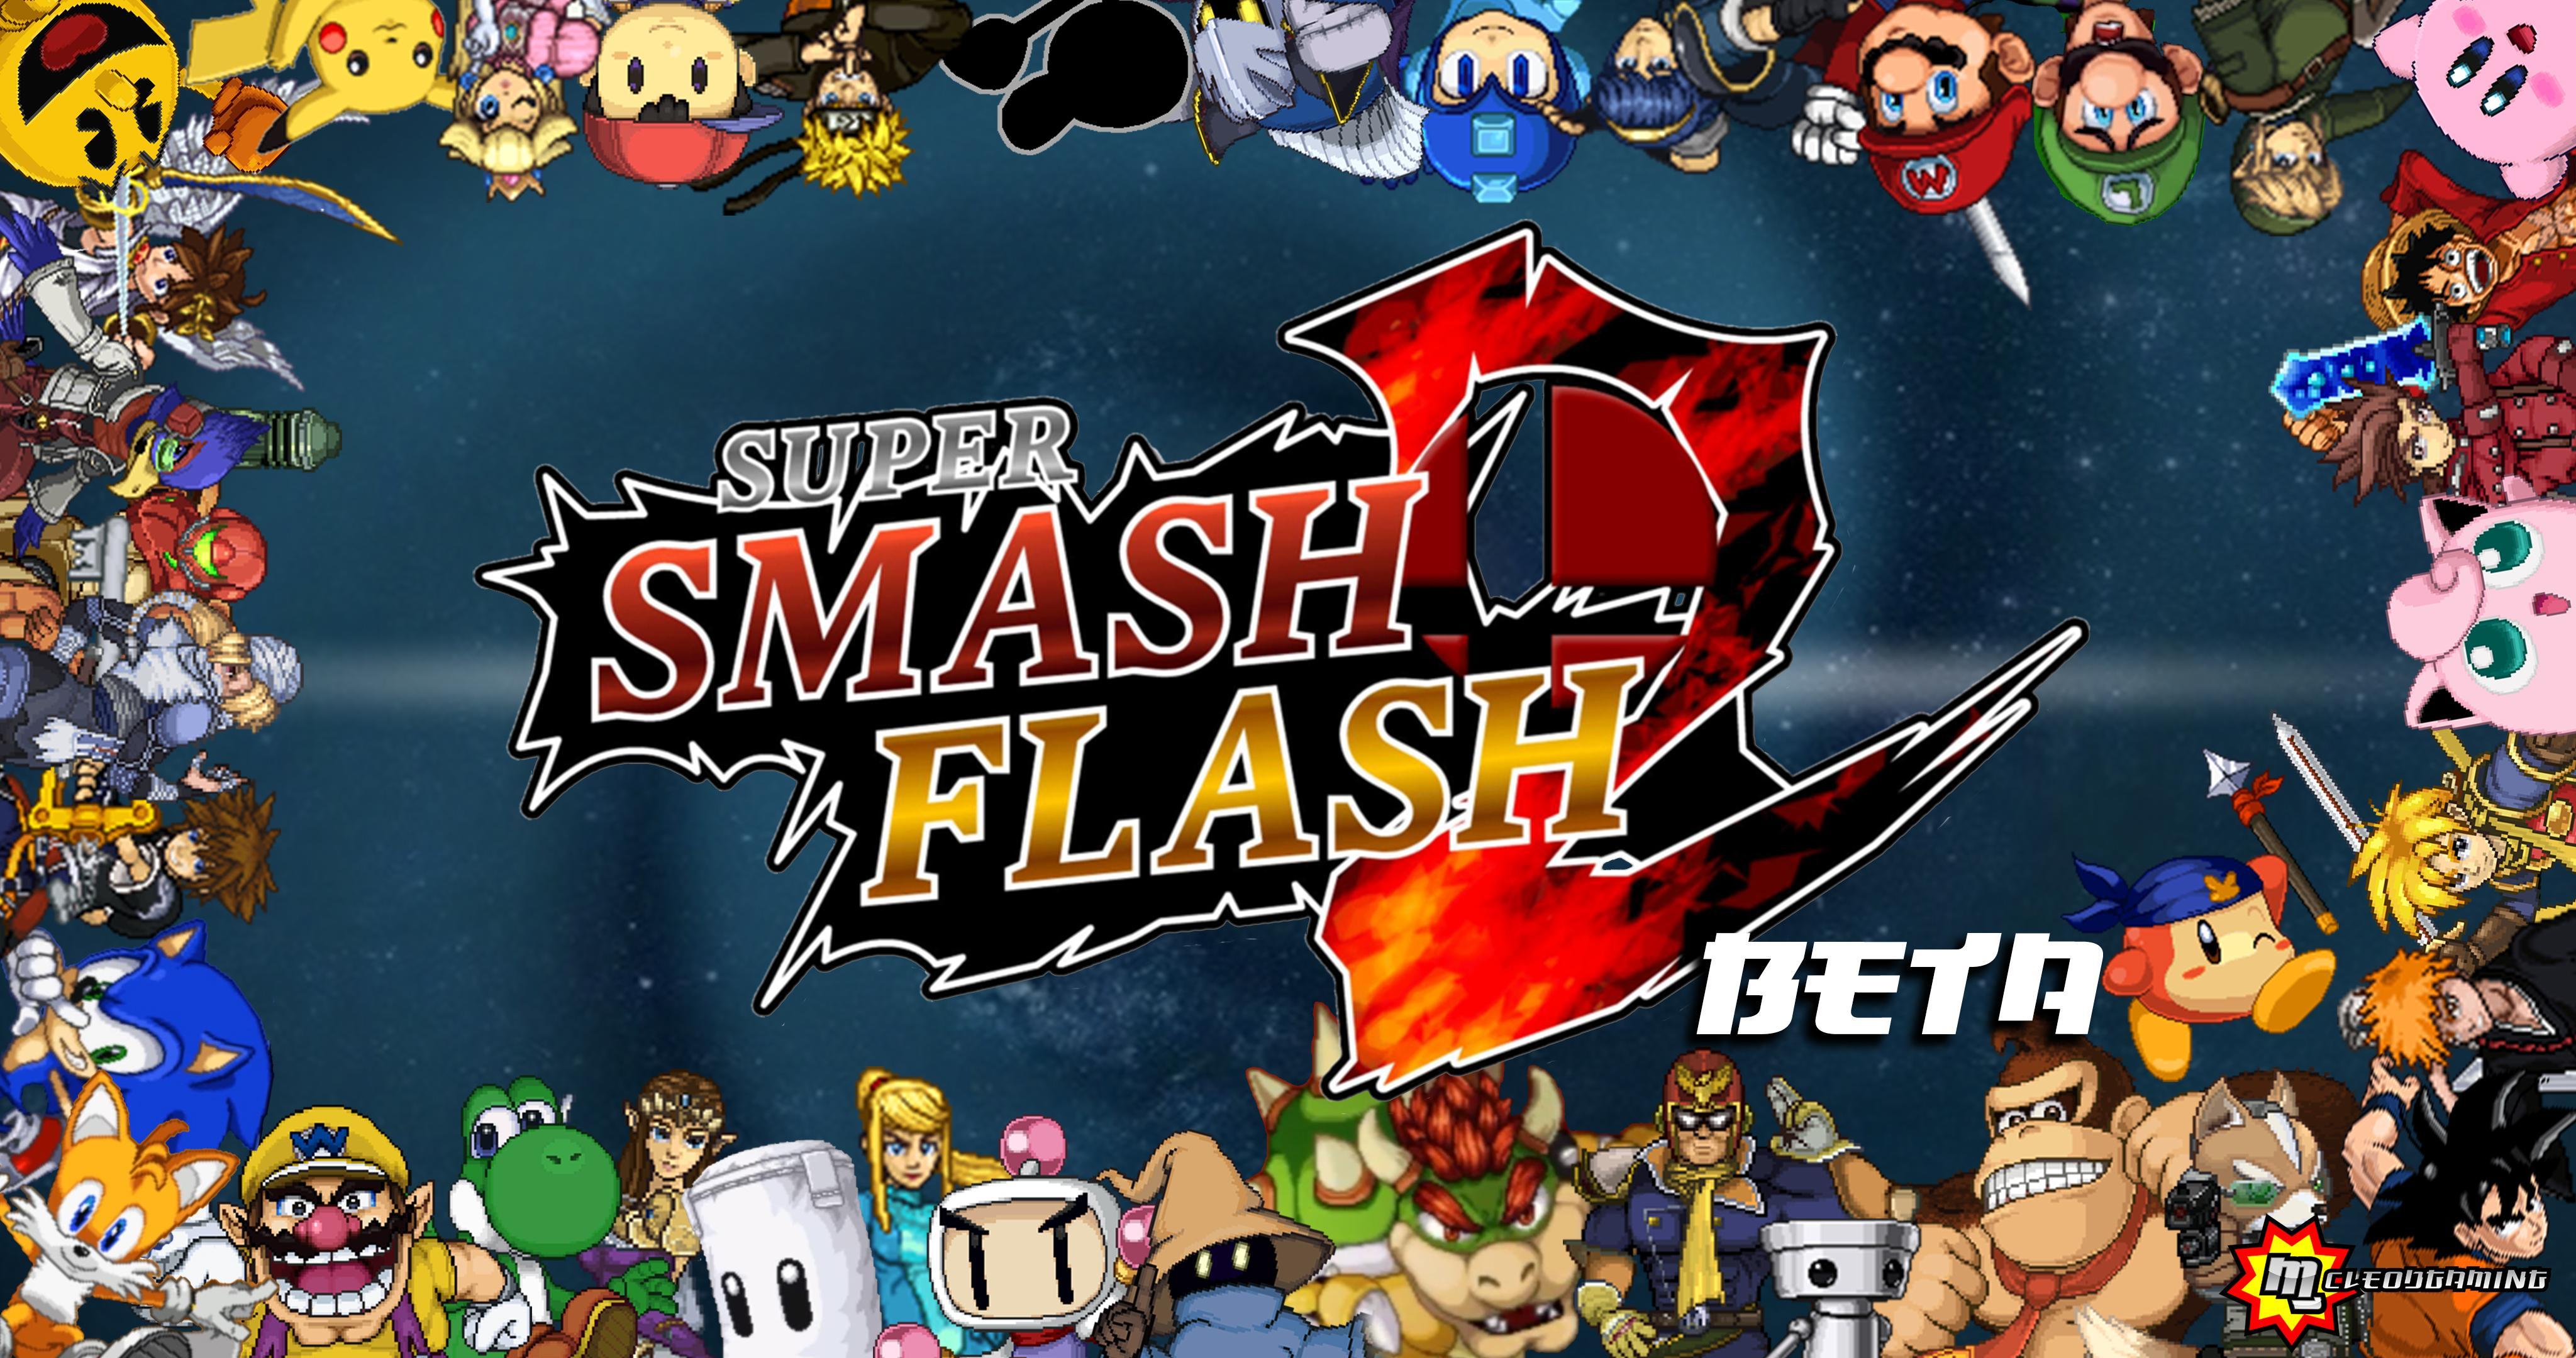 super smash flash 2 beta multiplayer